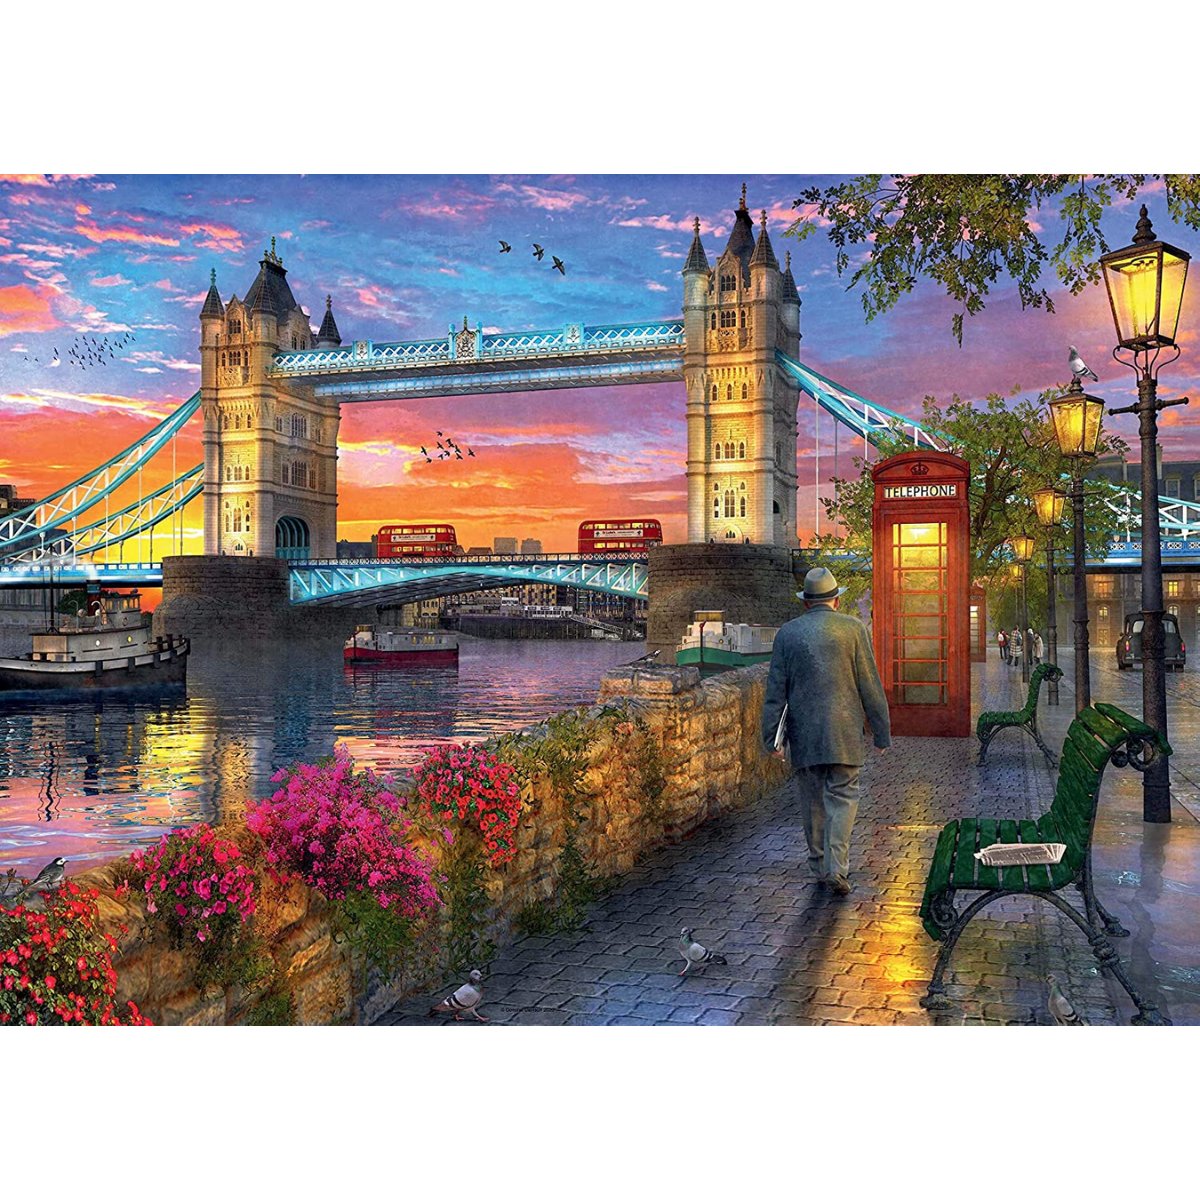 Ravensburger Tower Bridge at Sunset Jigsaw Puzzle (1000 Pieces) - Phillips Hobbies